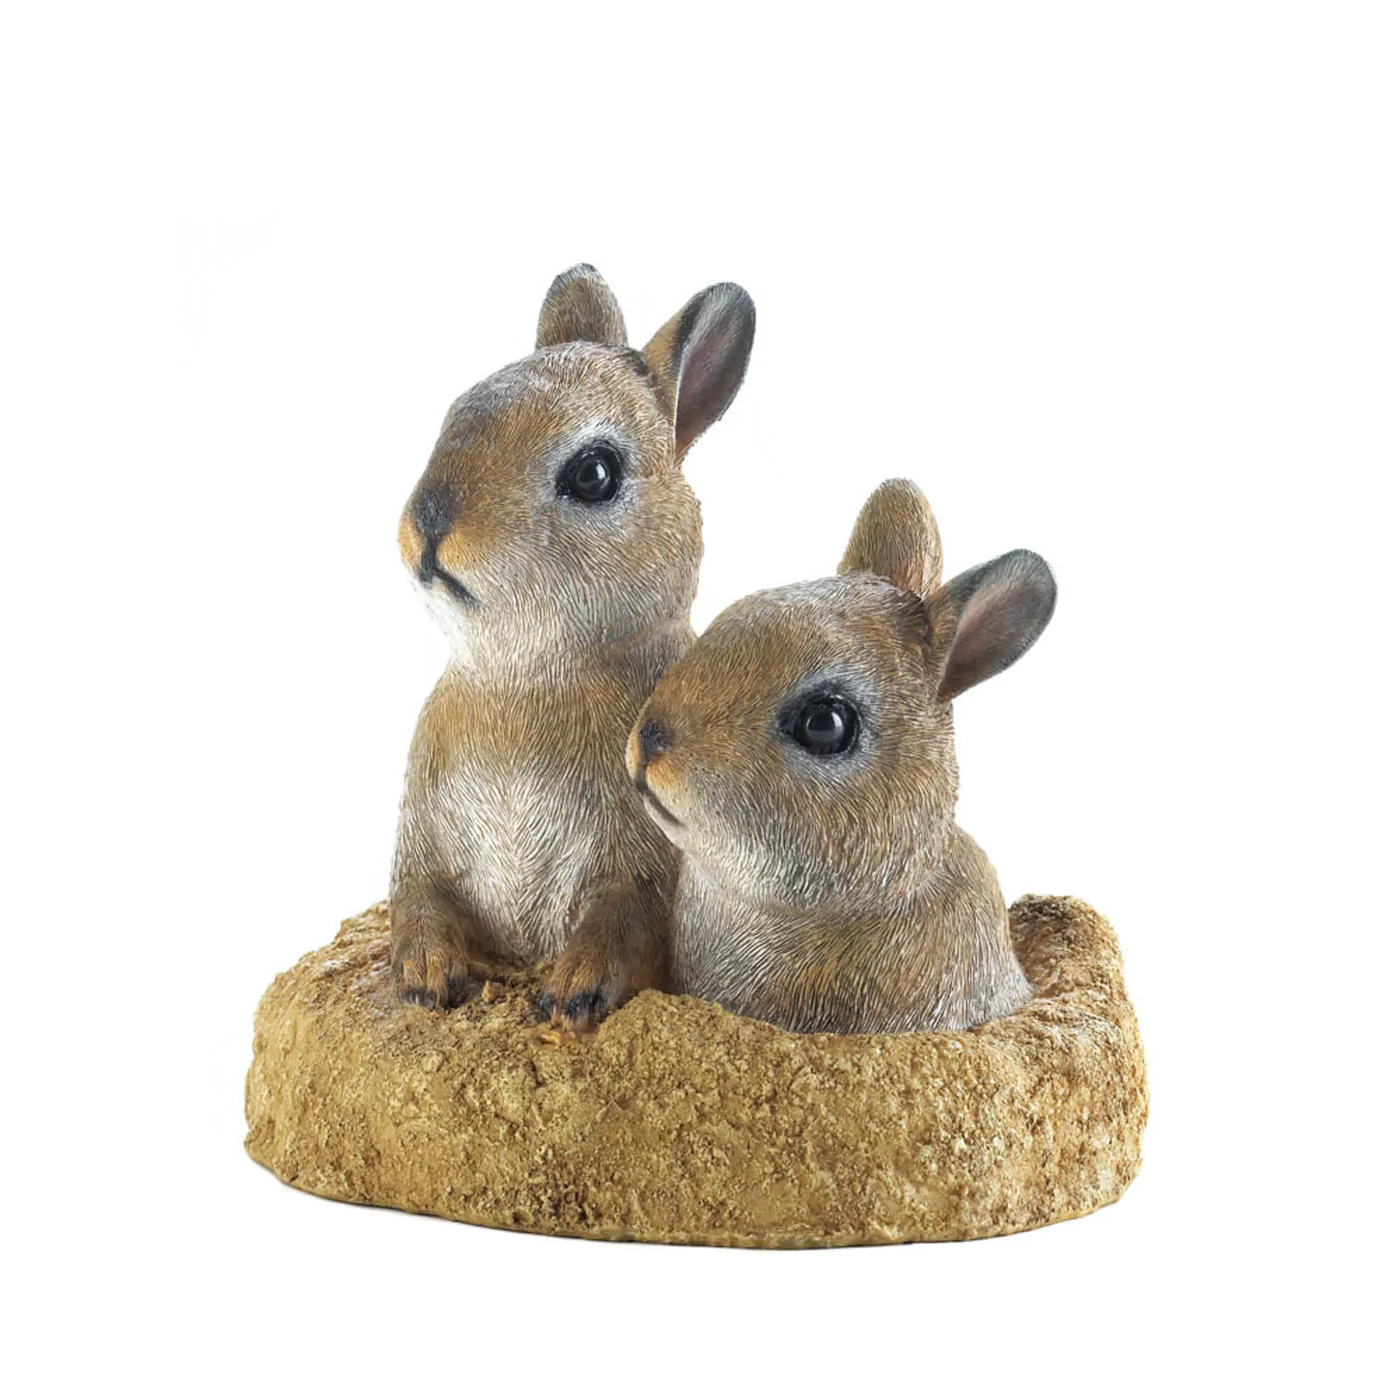 Peek-A-Boo Garden Rabbit Figurine - $28.80